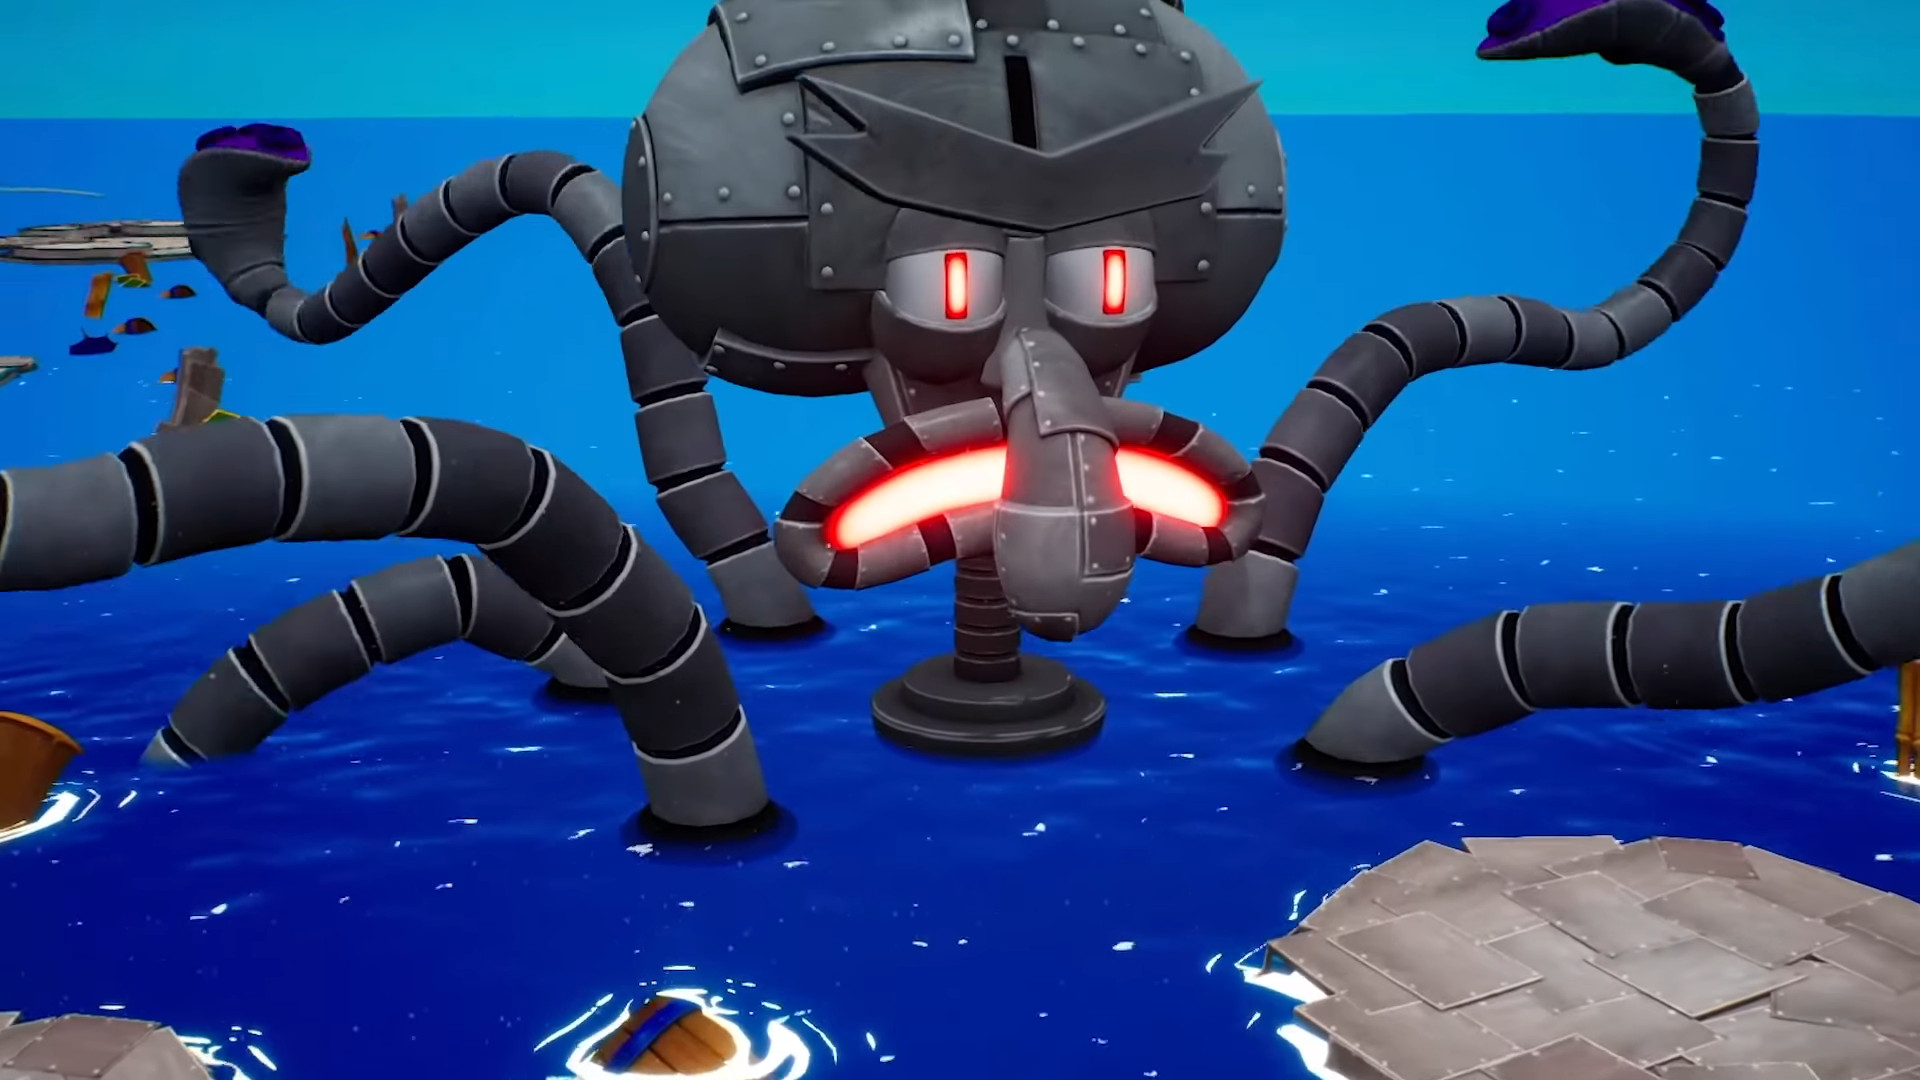 Spongebob Faces Robo Squidward In Multiplayer Horde Mode Trailer